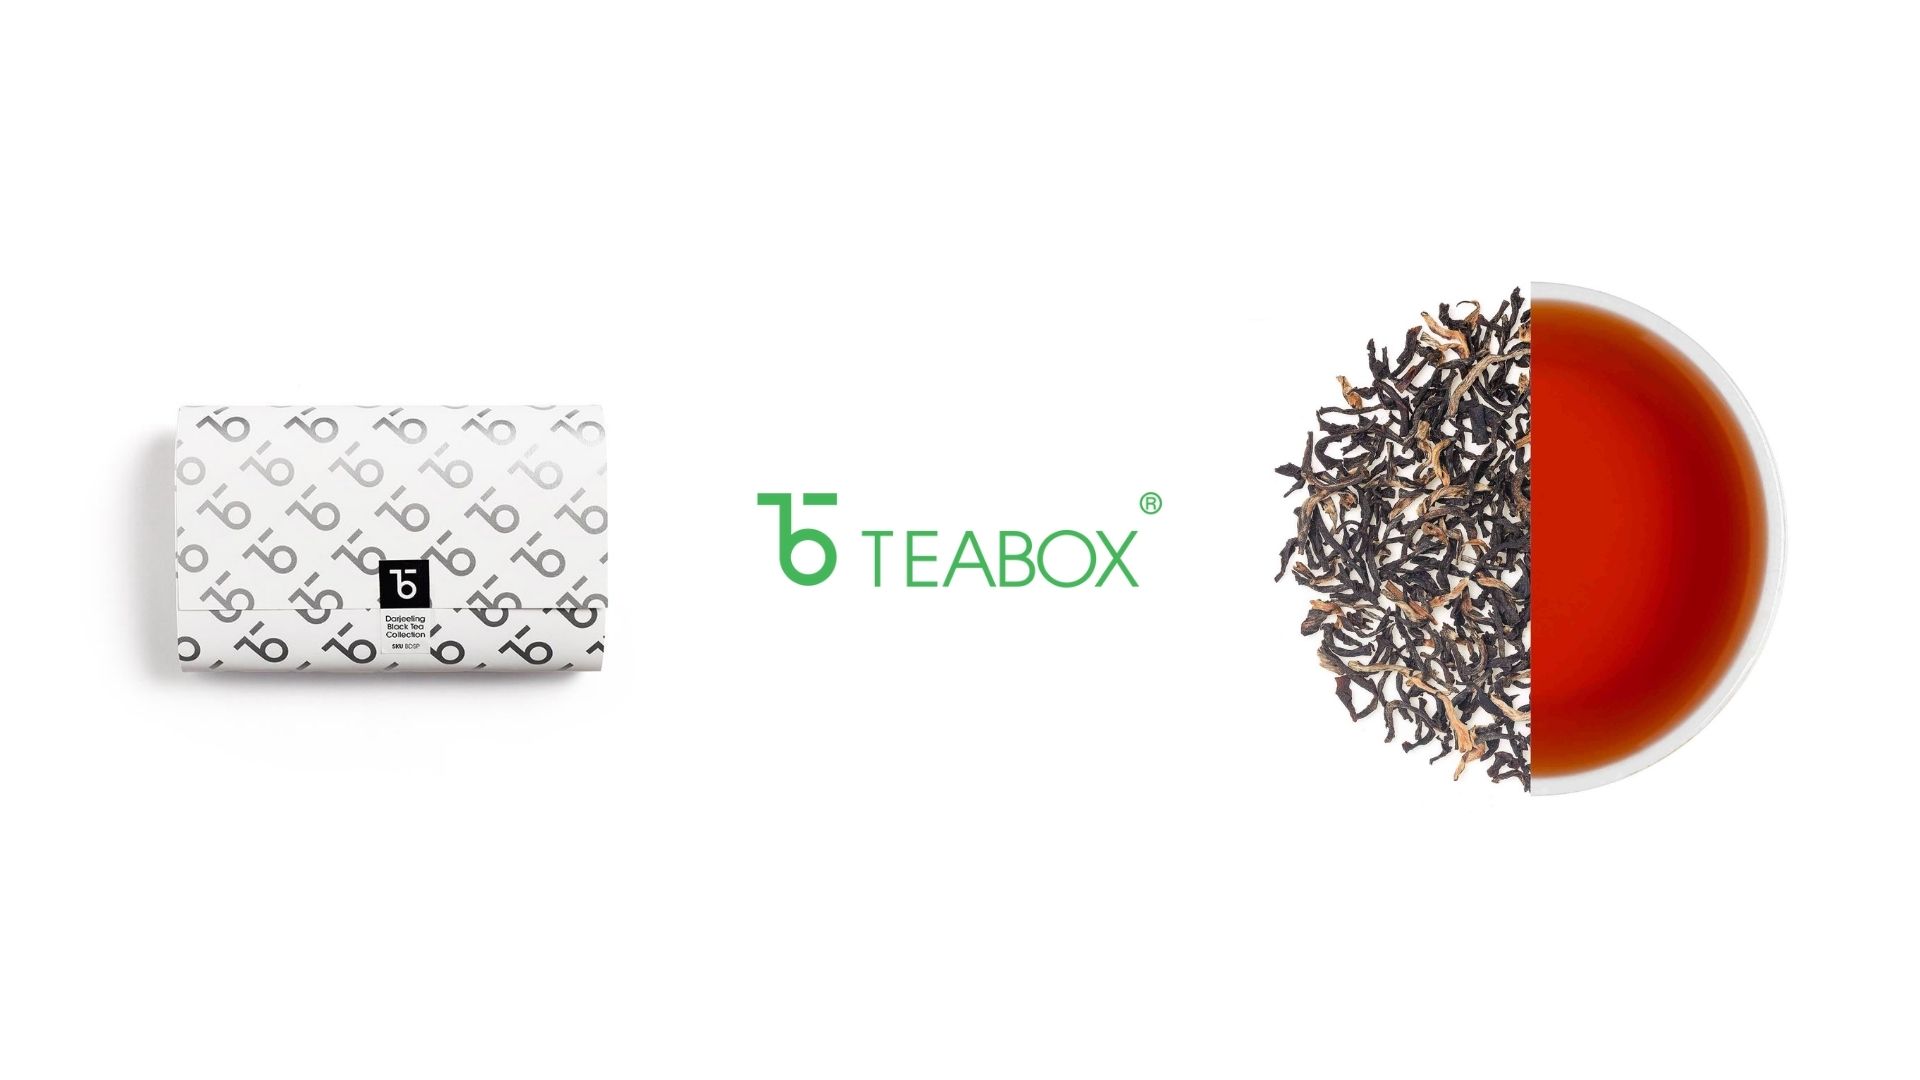 Tea Box subscription brand